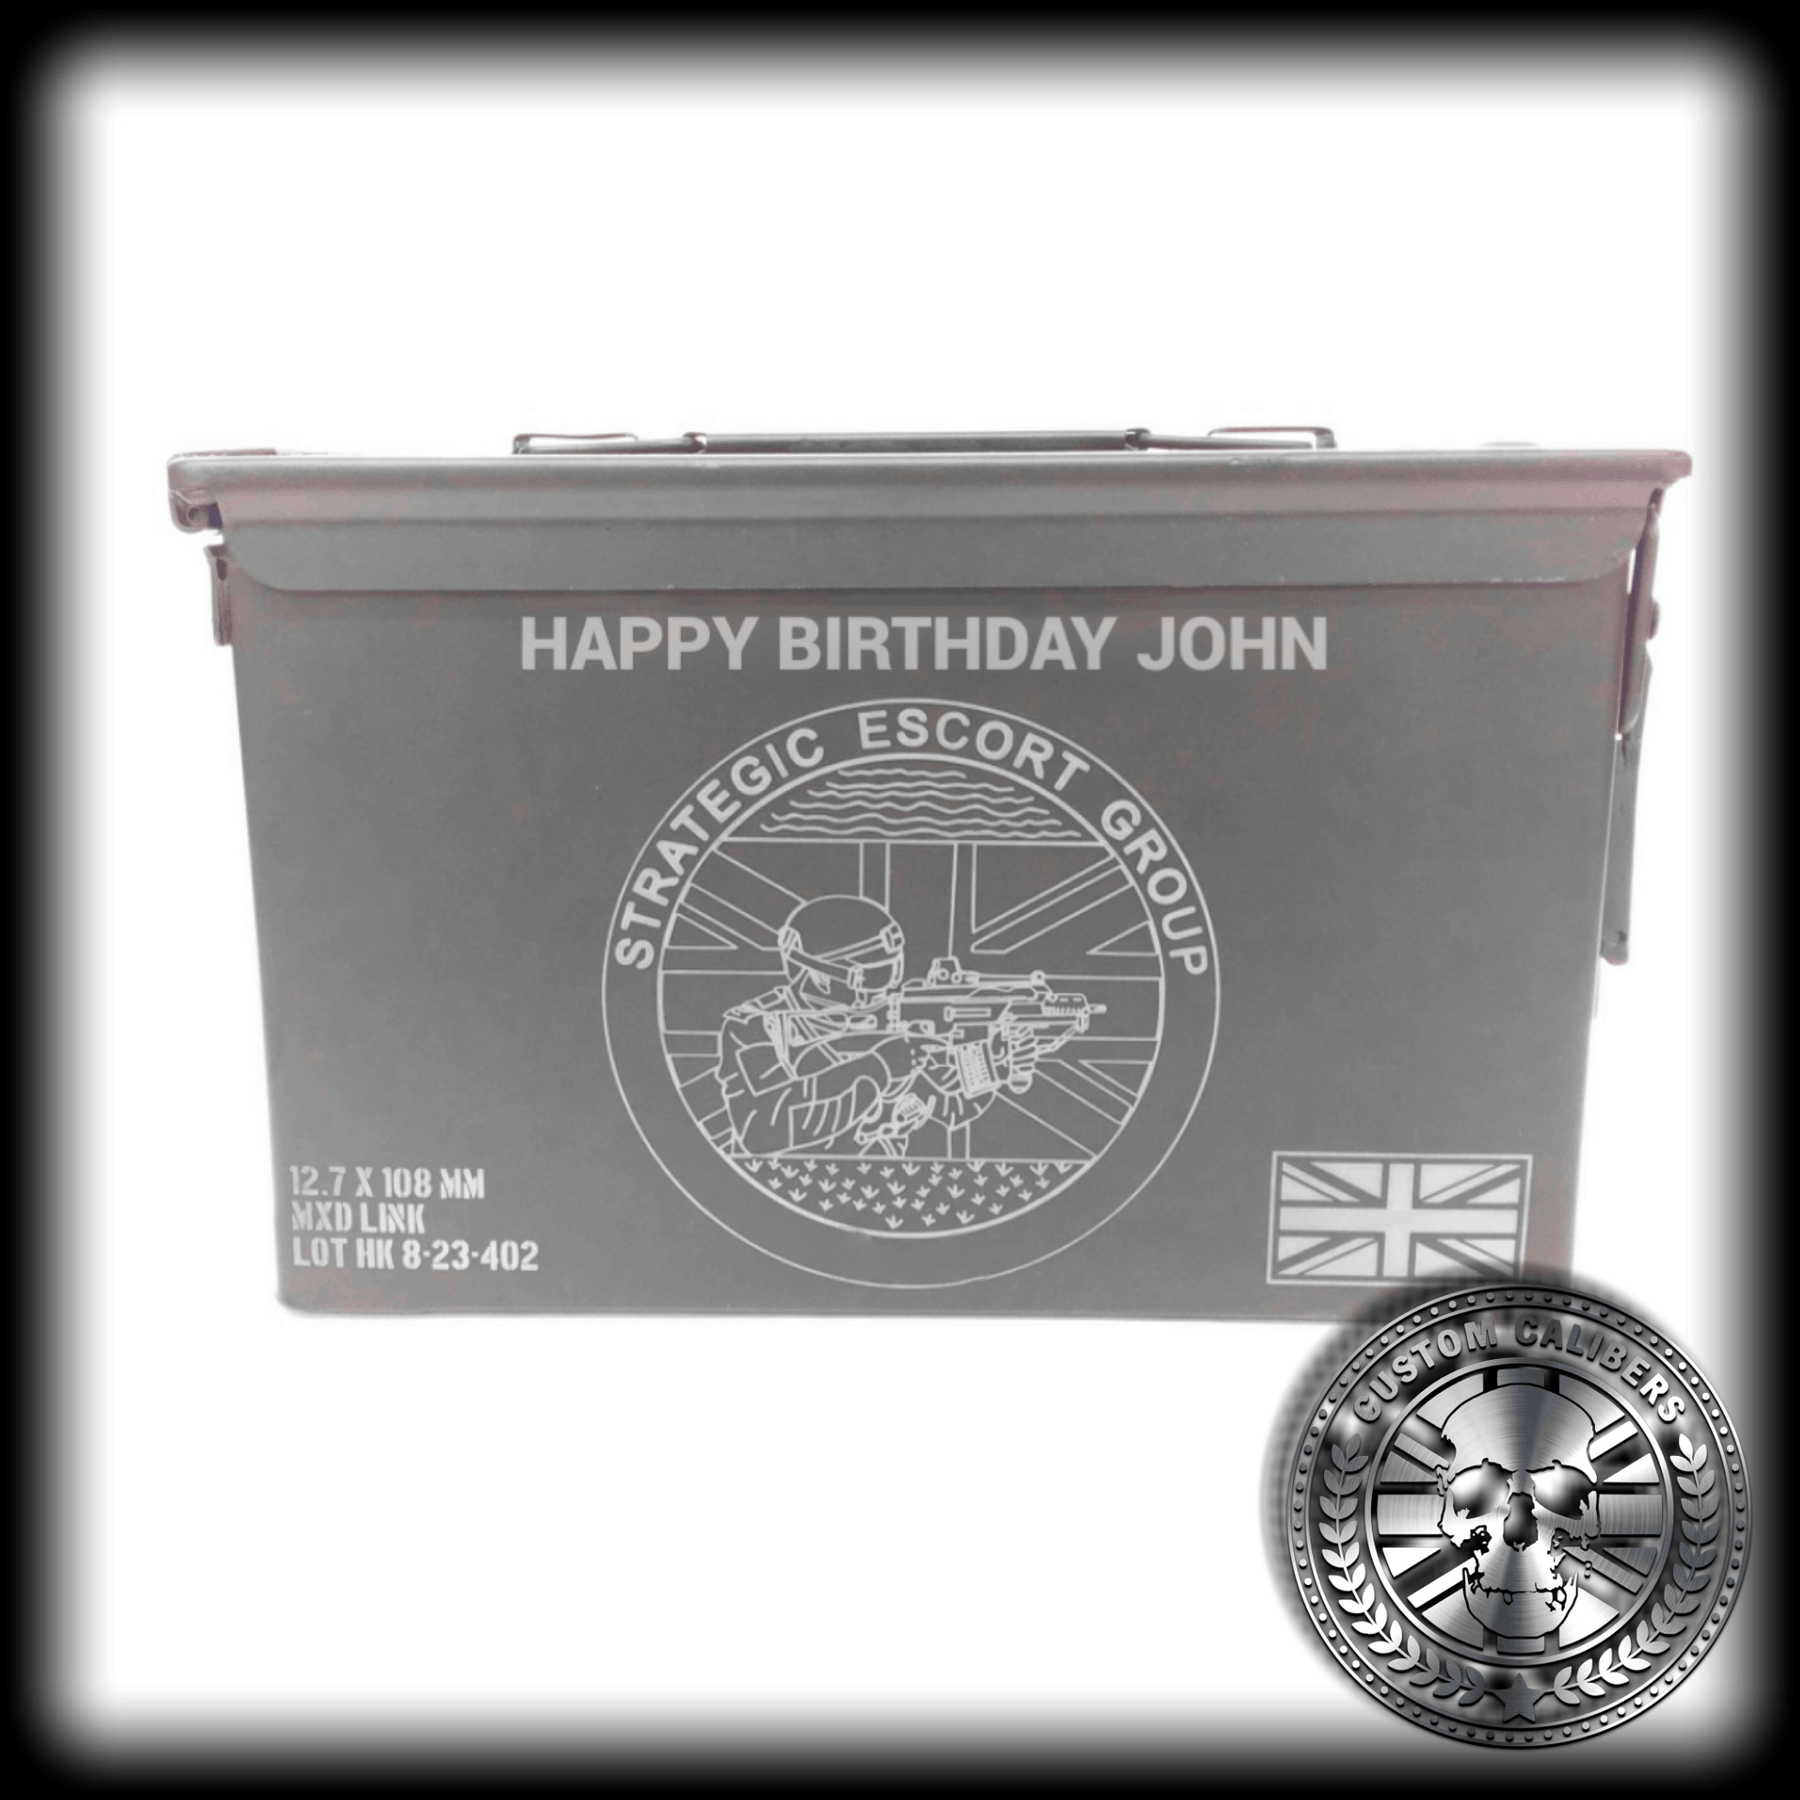 A Strategic Escort Group strongbox wishing John a happy birthday